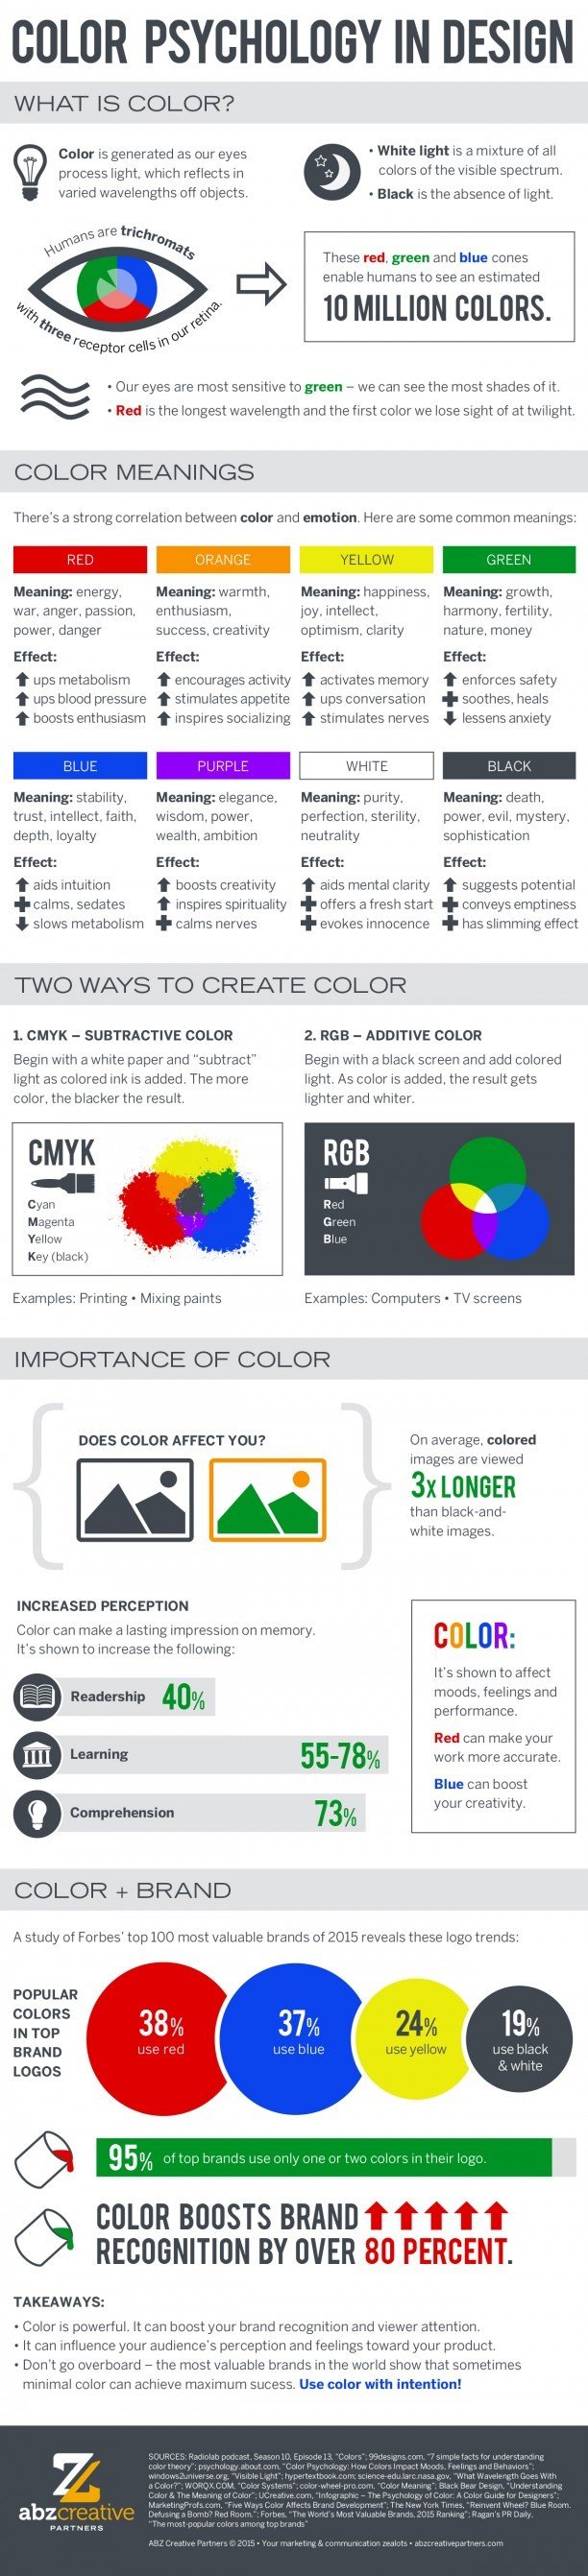 Color psychology in logo design infographic